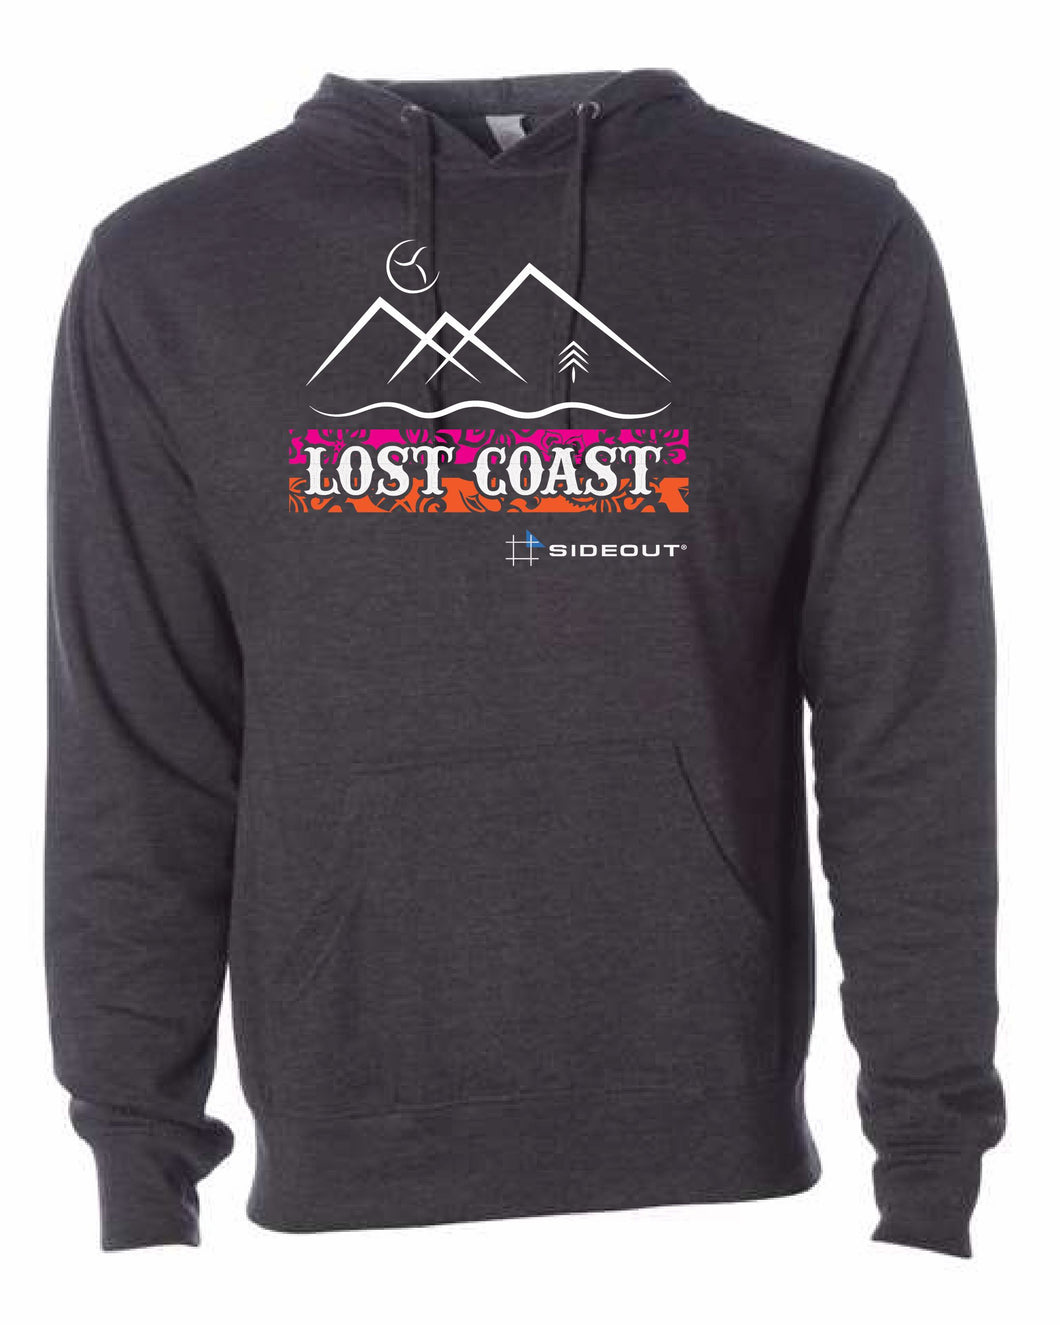 Lost Coast Volleyball Charcoal Adult Unisex Hooded Sweatshirt